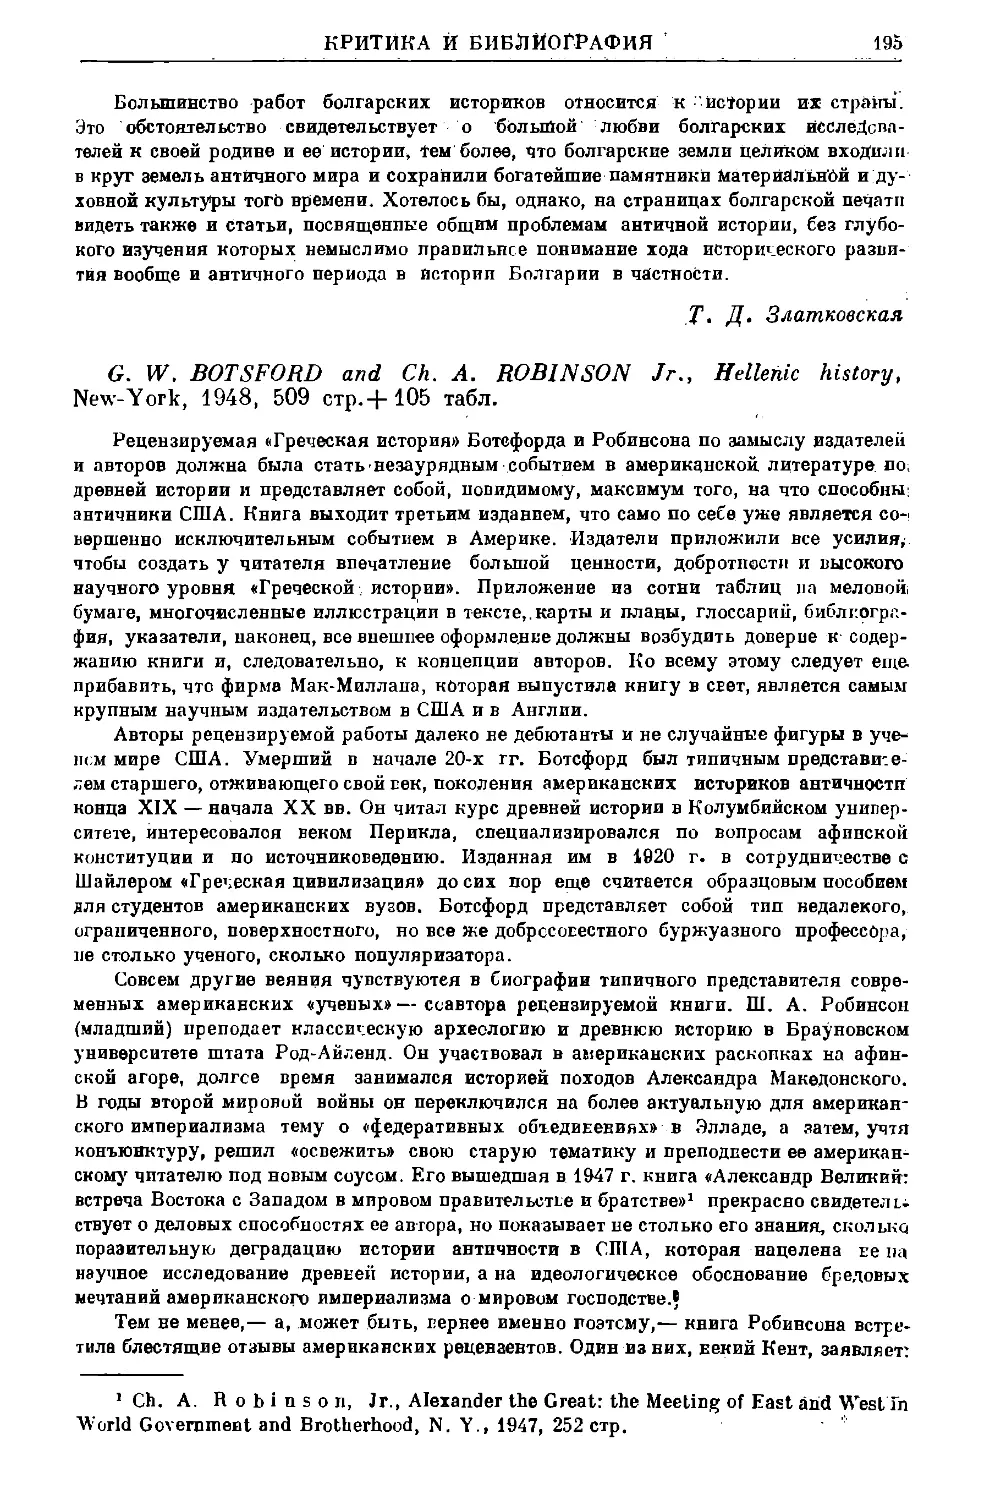 Ленцман Я.А. – G.W. Botsford, Ch.A. Robinson Jr. Hellenic history. N.Y., 1948